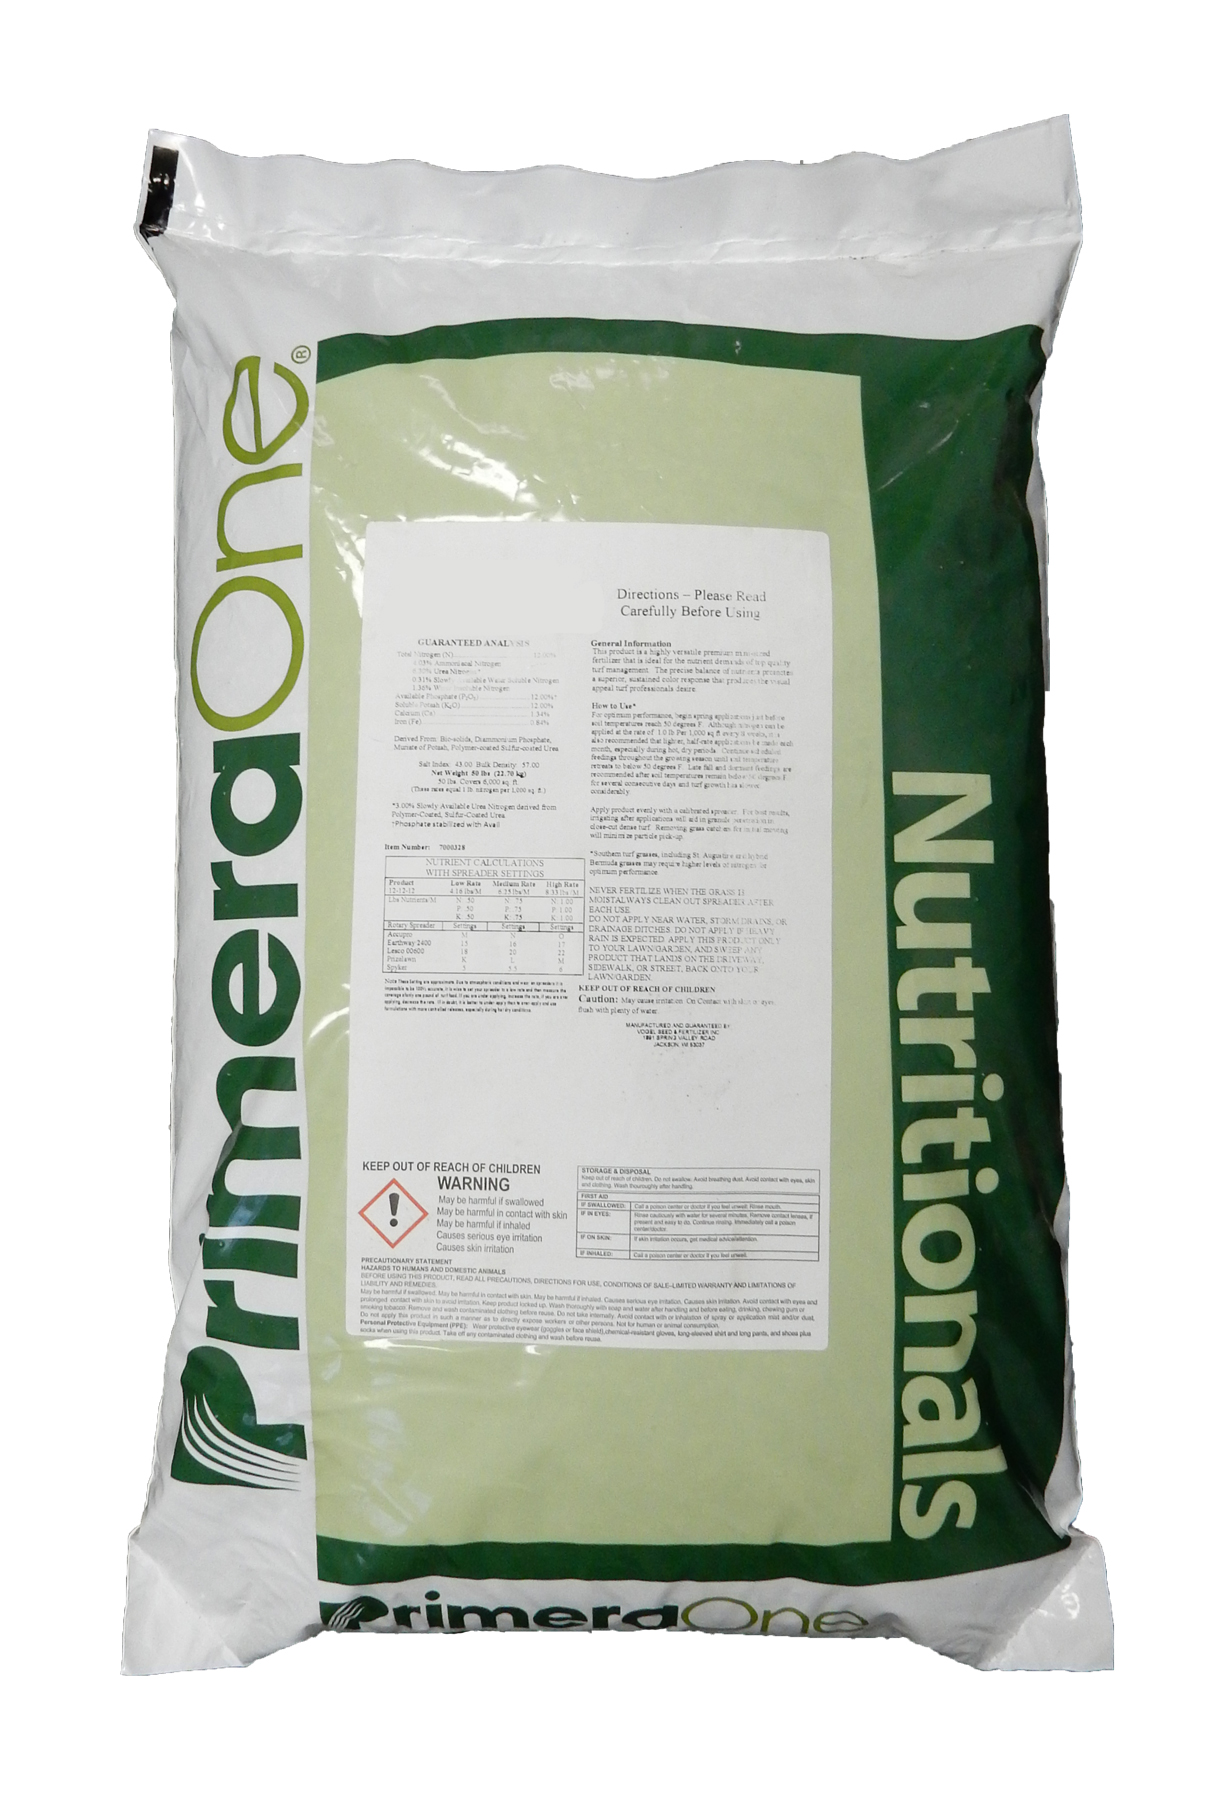 PrimeraOne 20-10-20 Greenhouse 25 lb Bag - Water Soluble Fertilizer